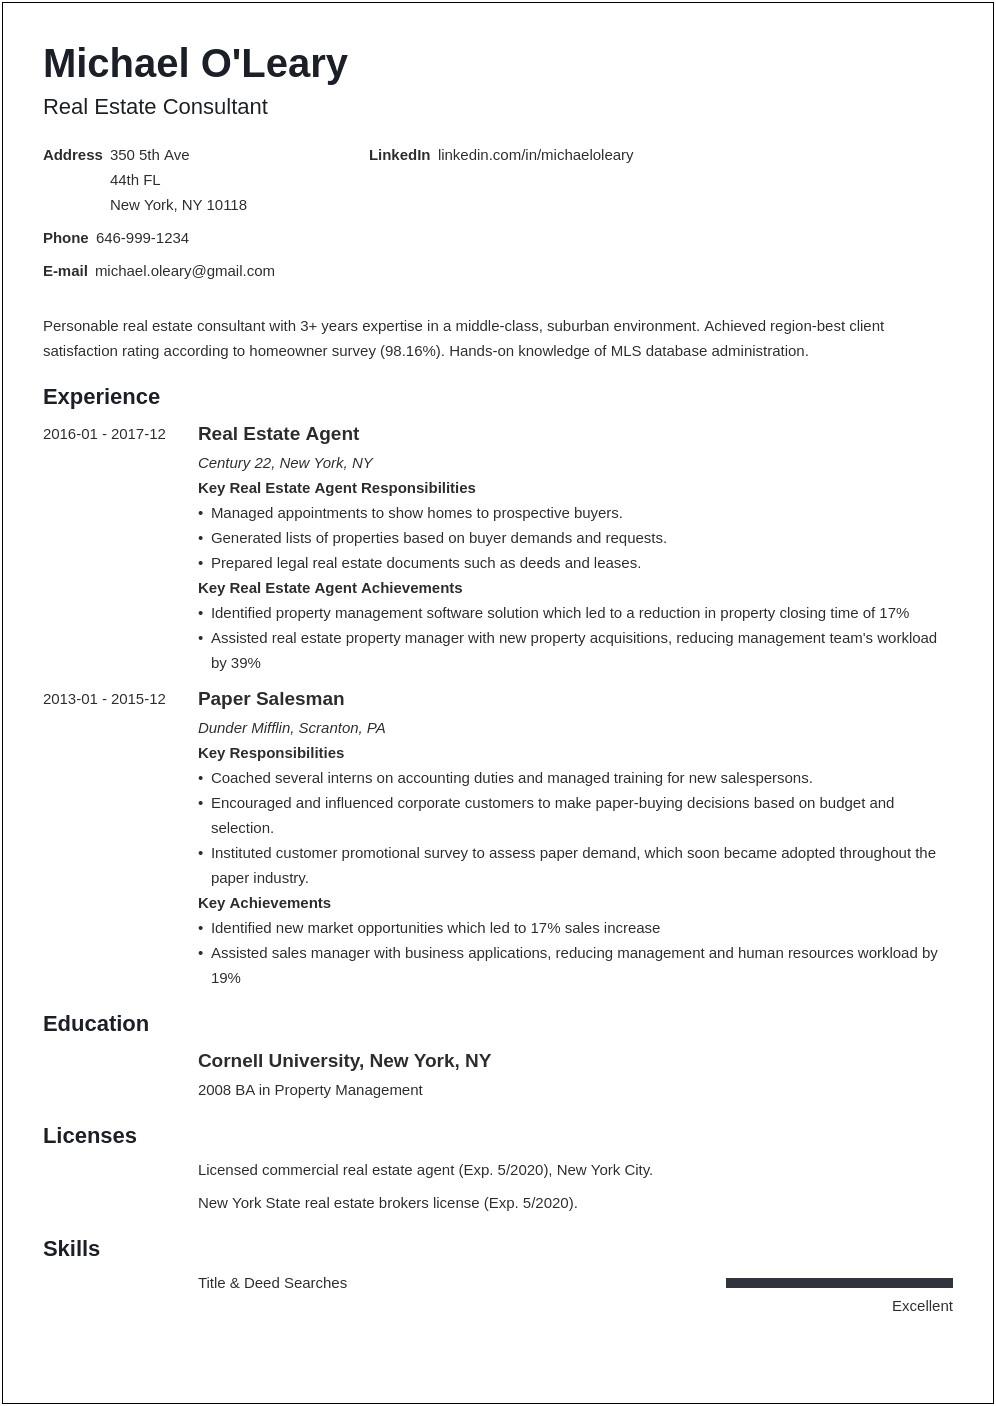 Examples Of Job Description For Realtor On Resume